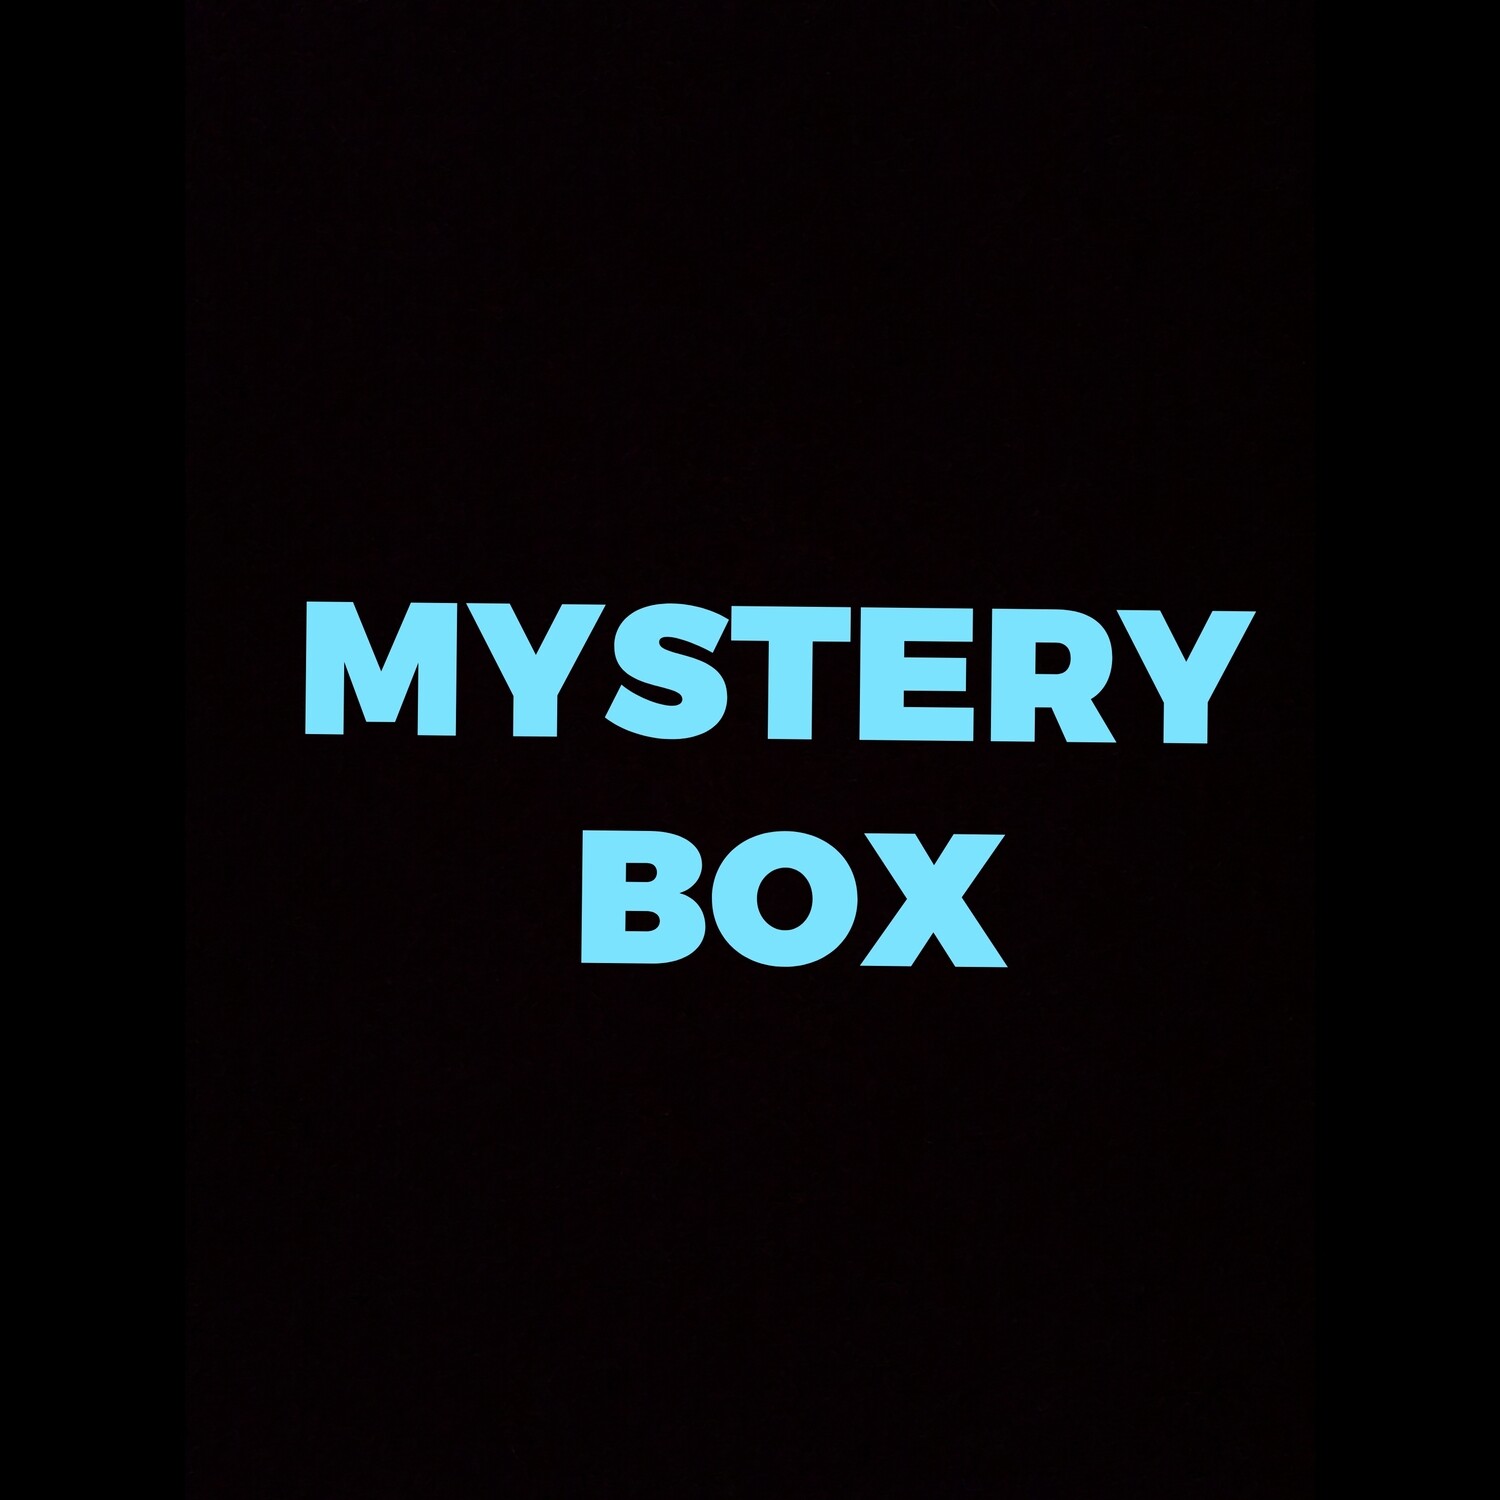 Mystery Box #2